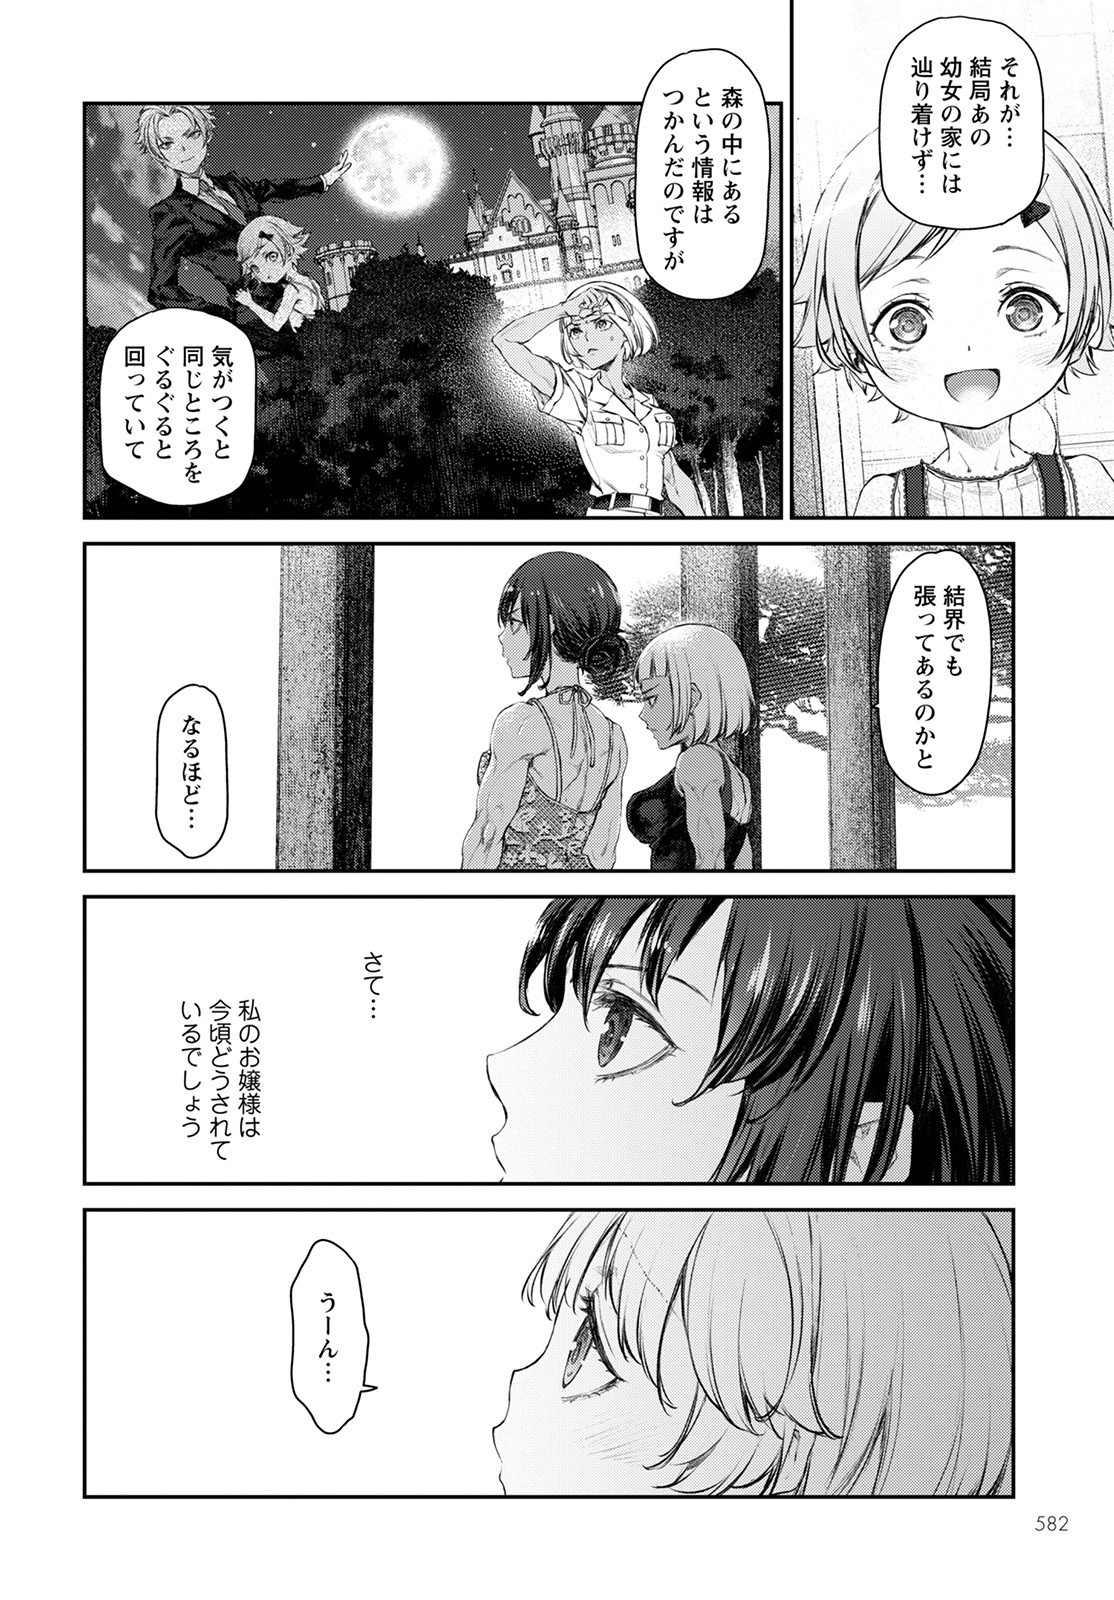 Uchi no Maid ga Uzasugiru! - Chapter 52 - Page 14